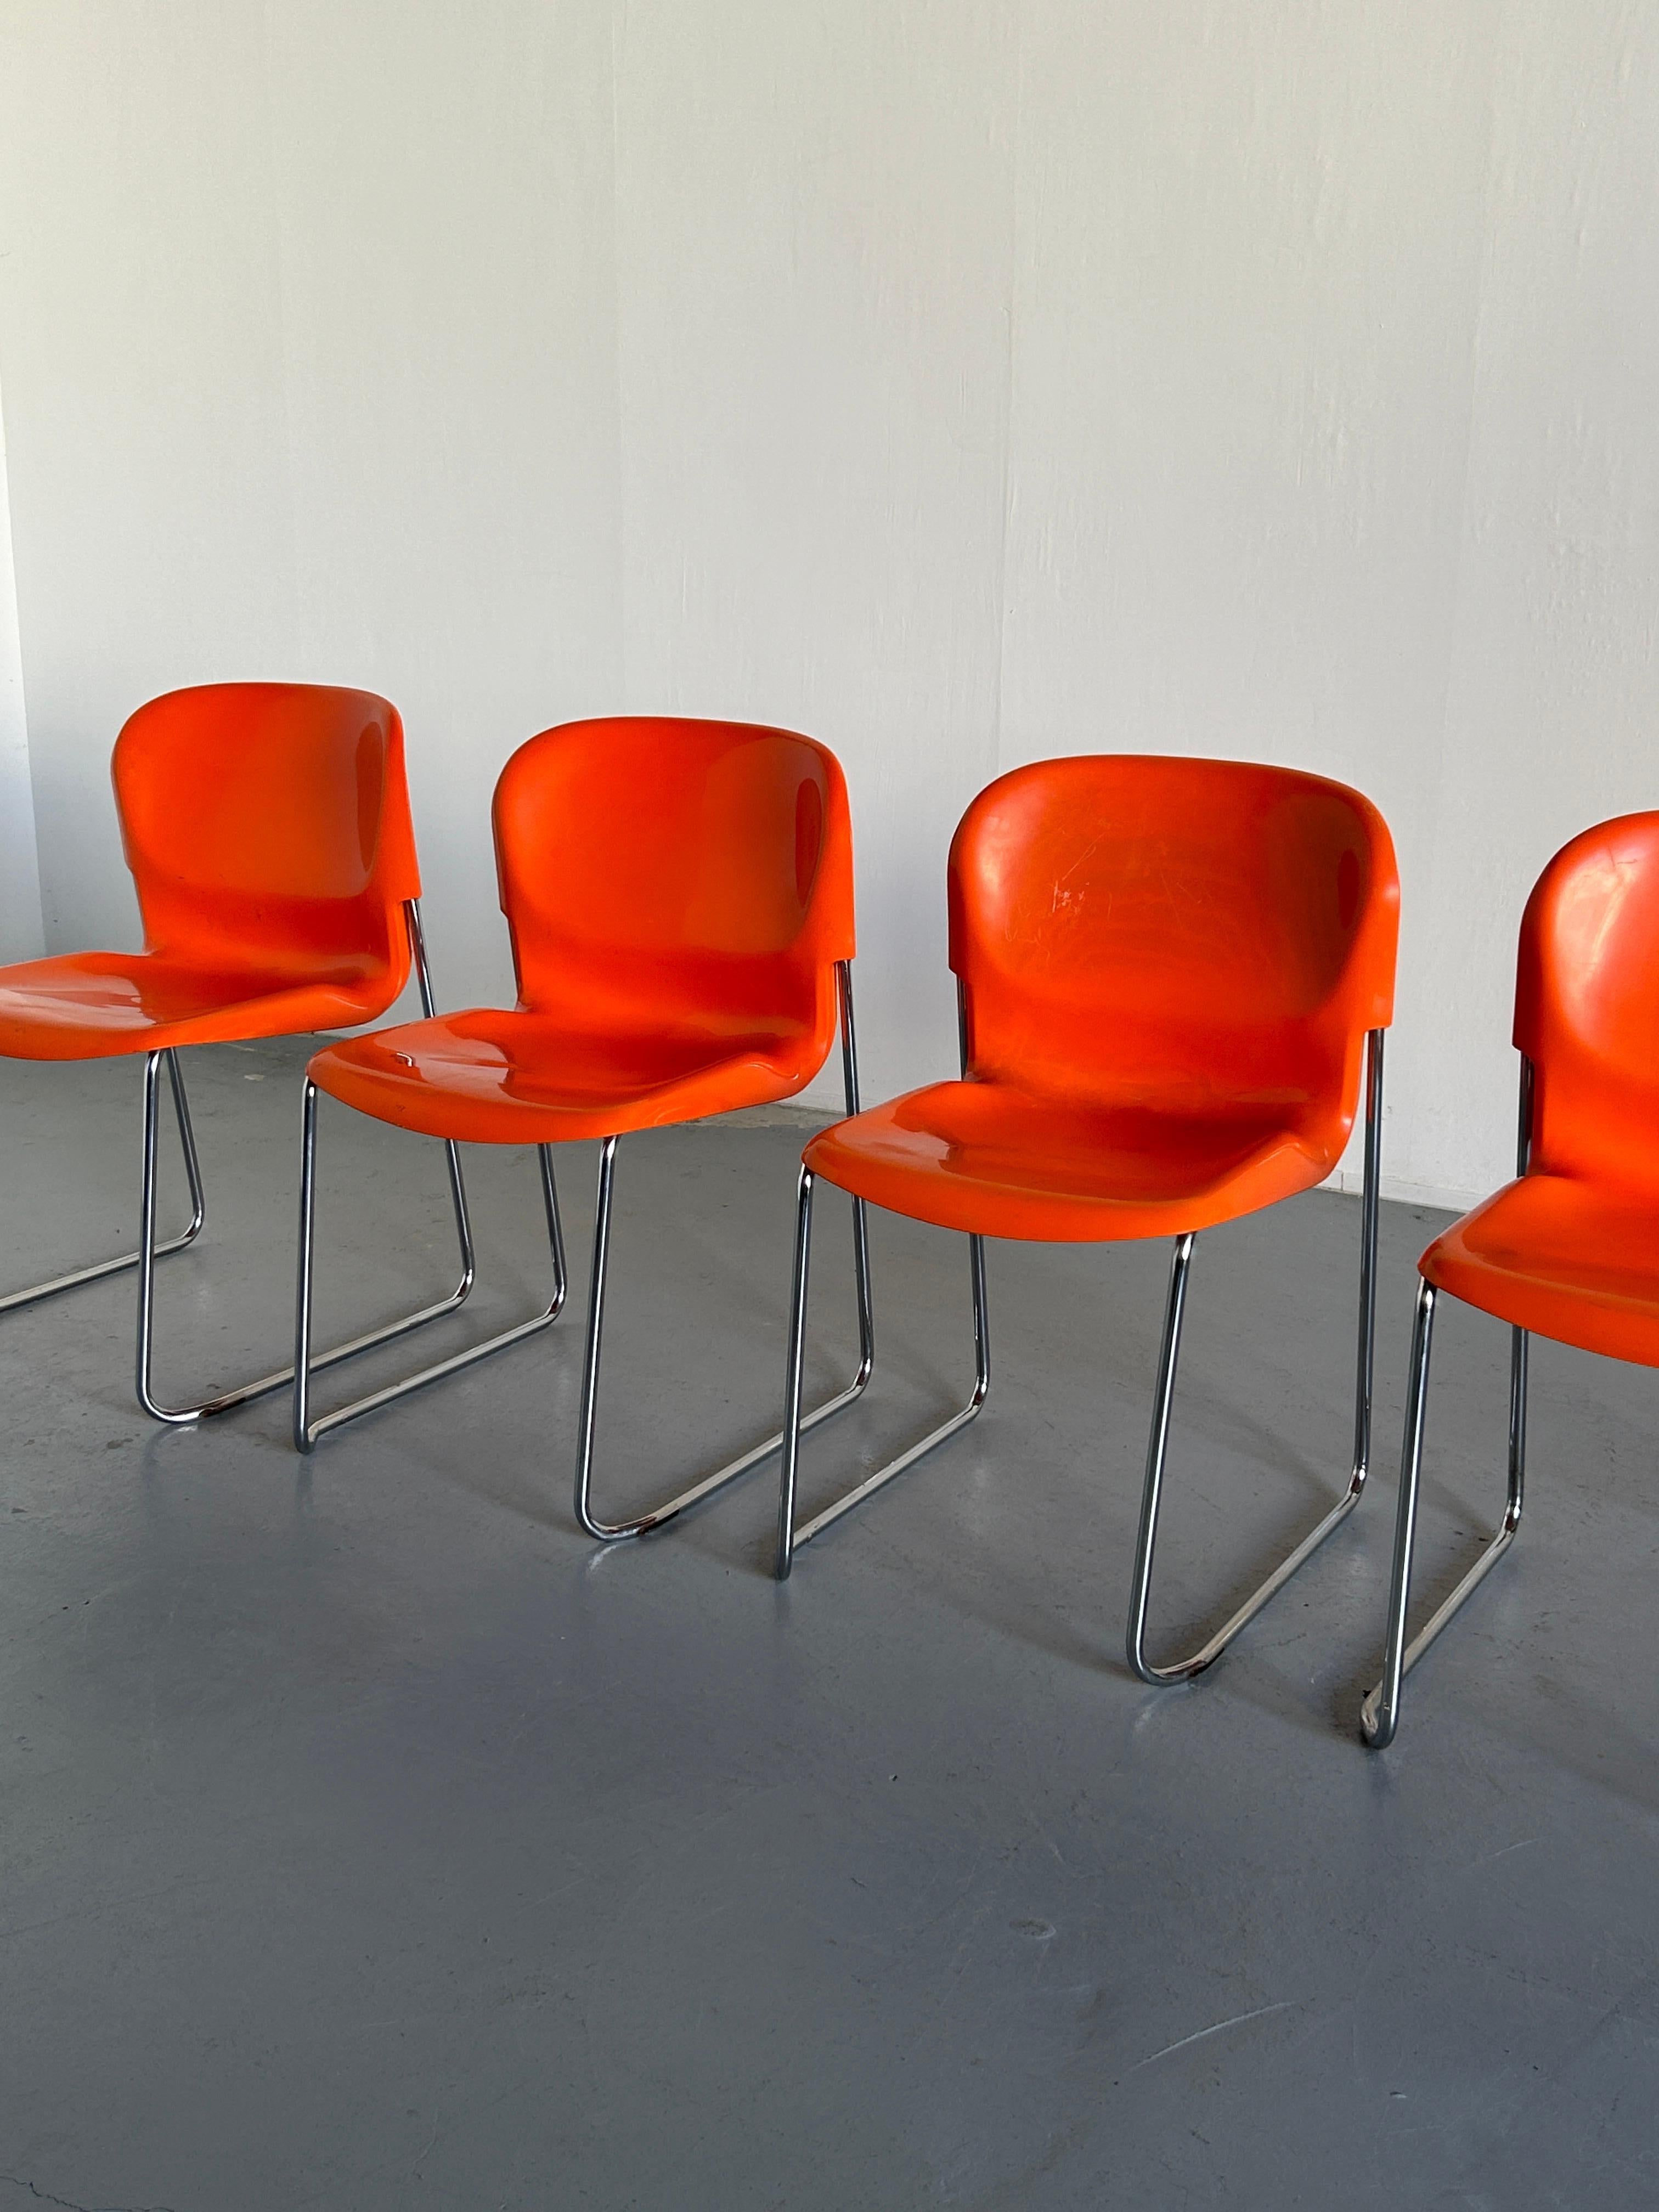 Late 20th Century Set of 4 Vintage Orange SM 400 Swing Chairs by Gerd Lange for Drabert, 1979